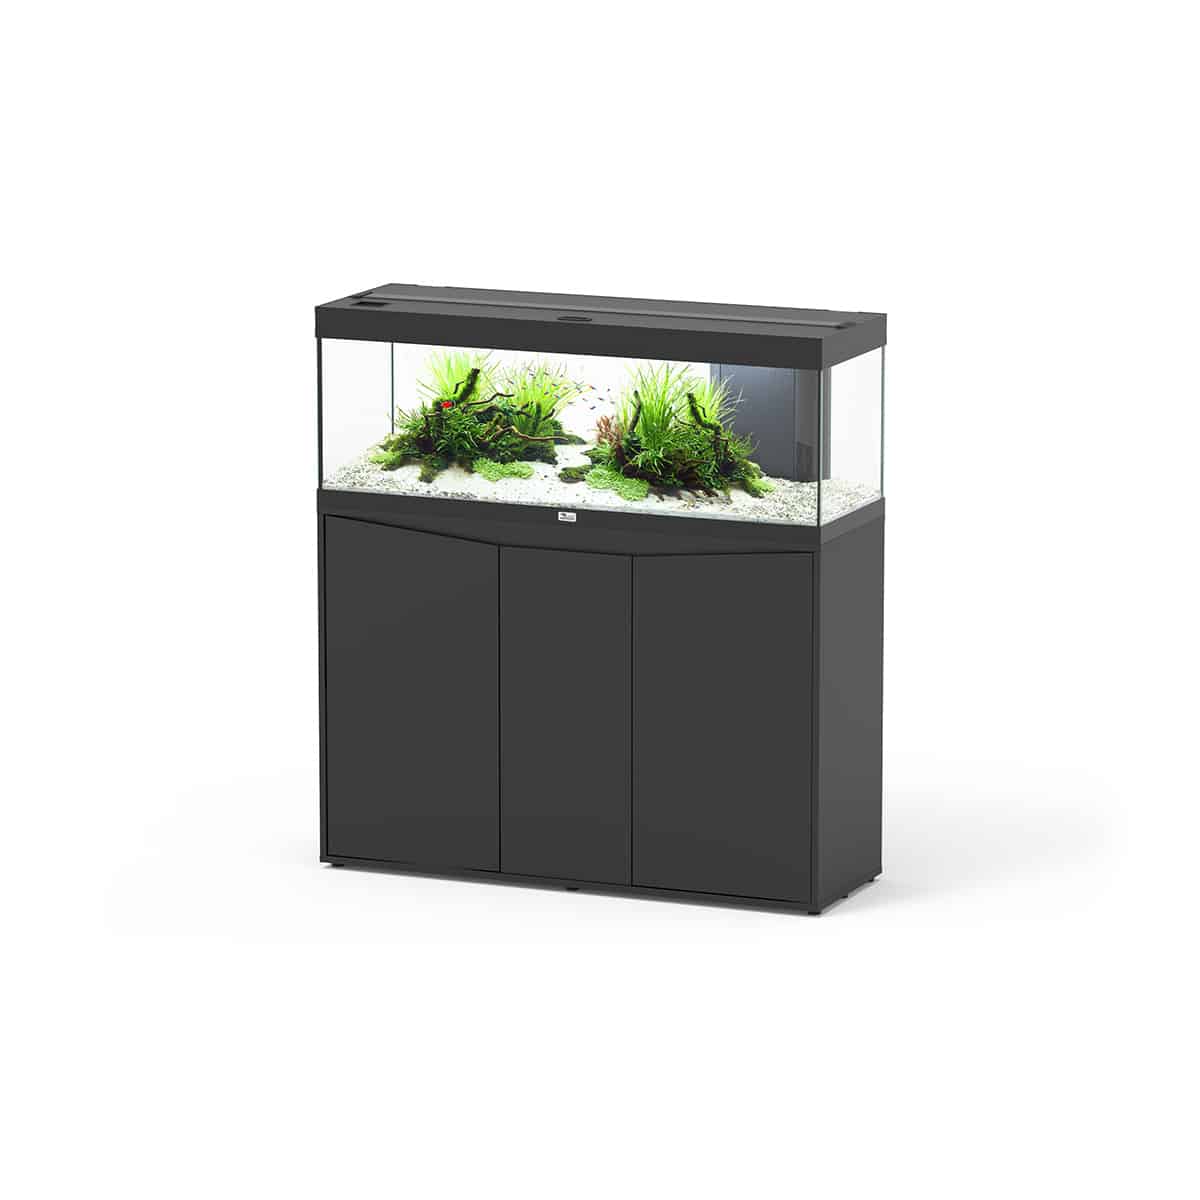 Aquatlantis Aquariumkombination Prestige 120 'Cabinet' schwarz